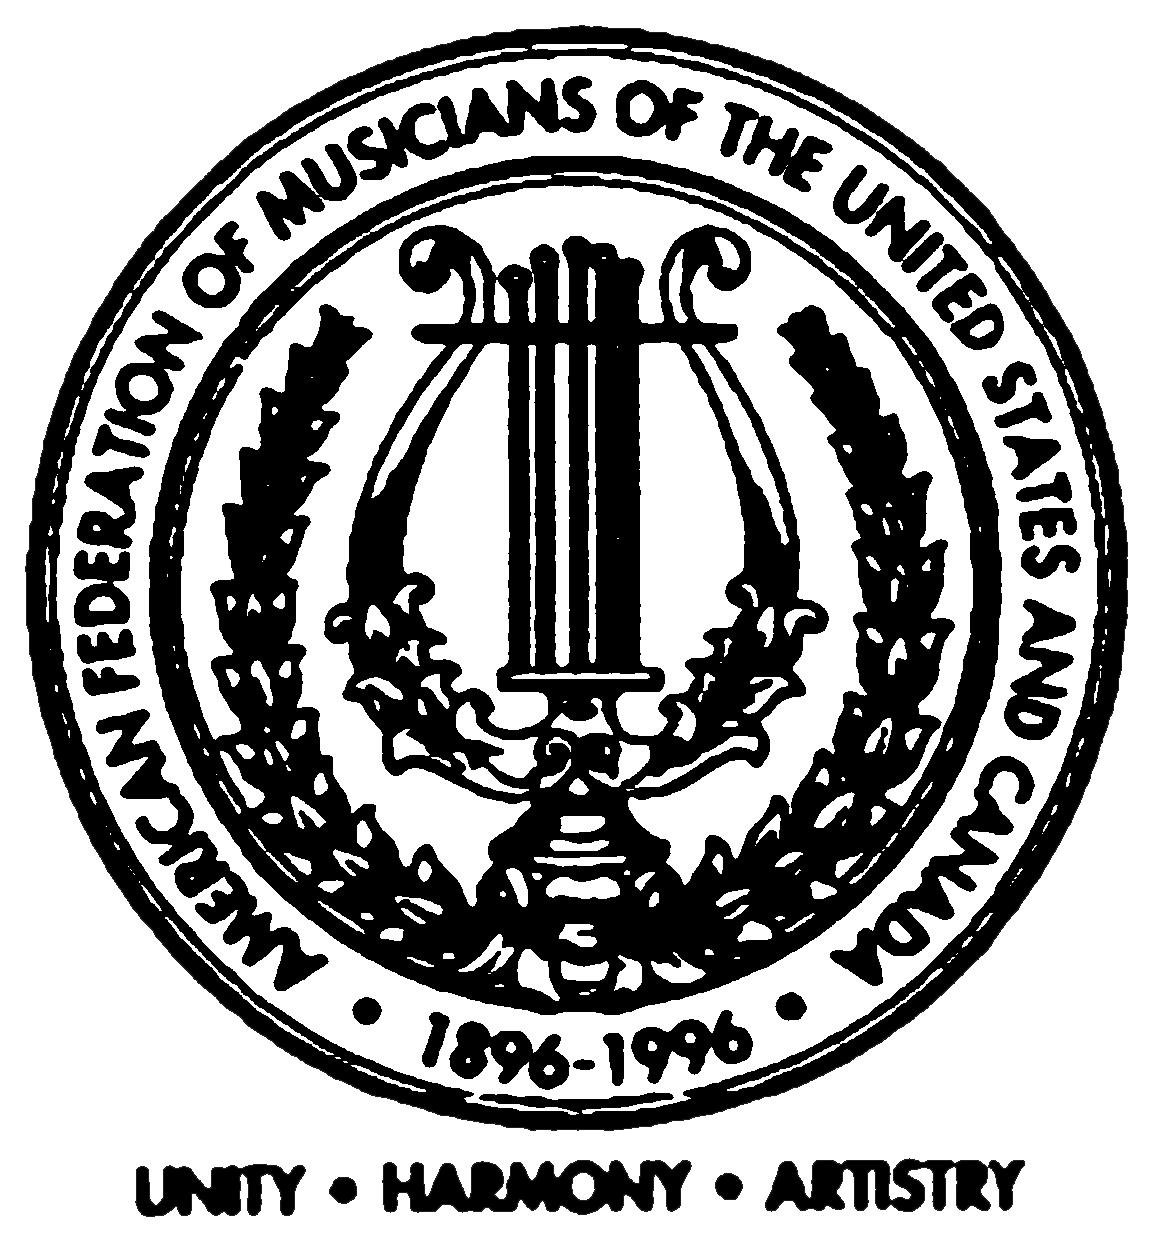 American federation of musicians logo